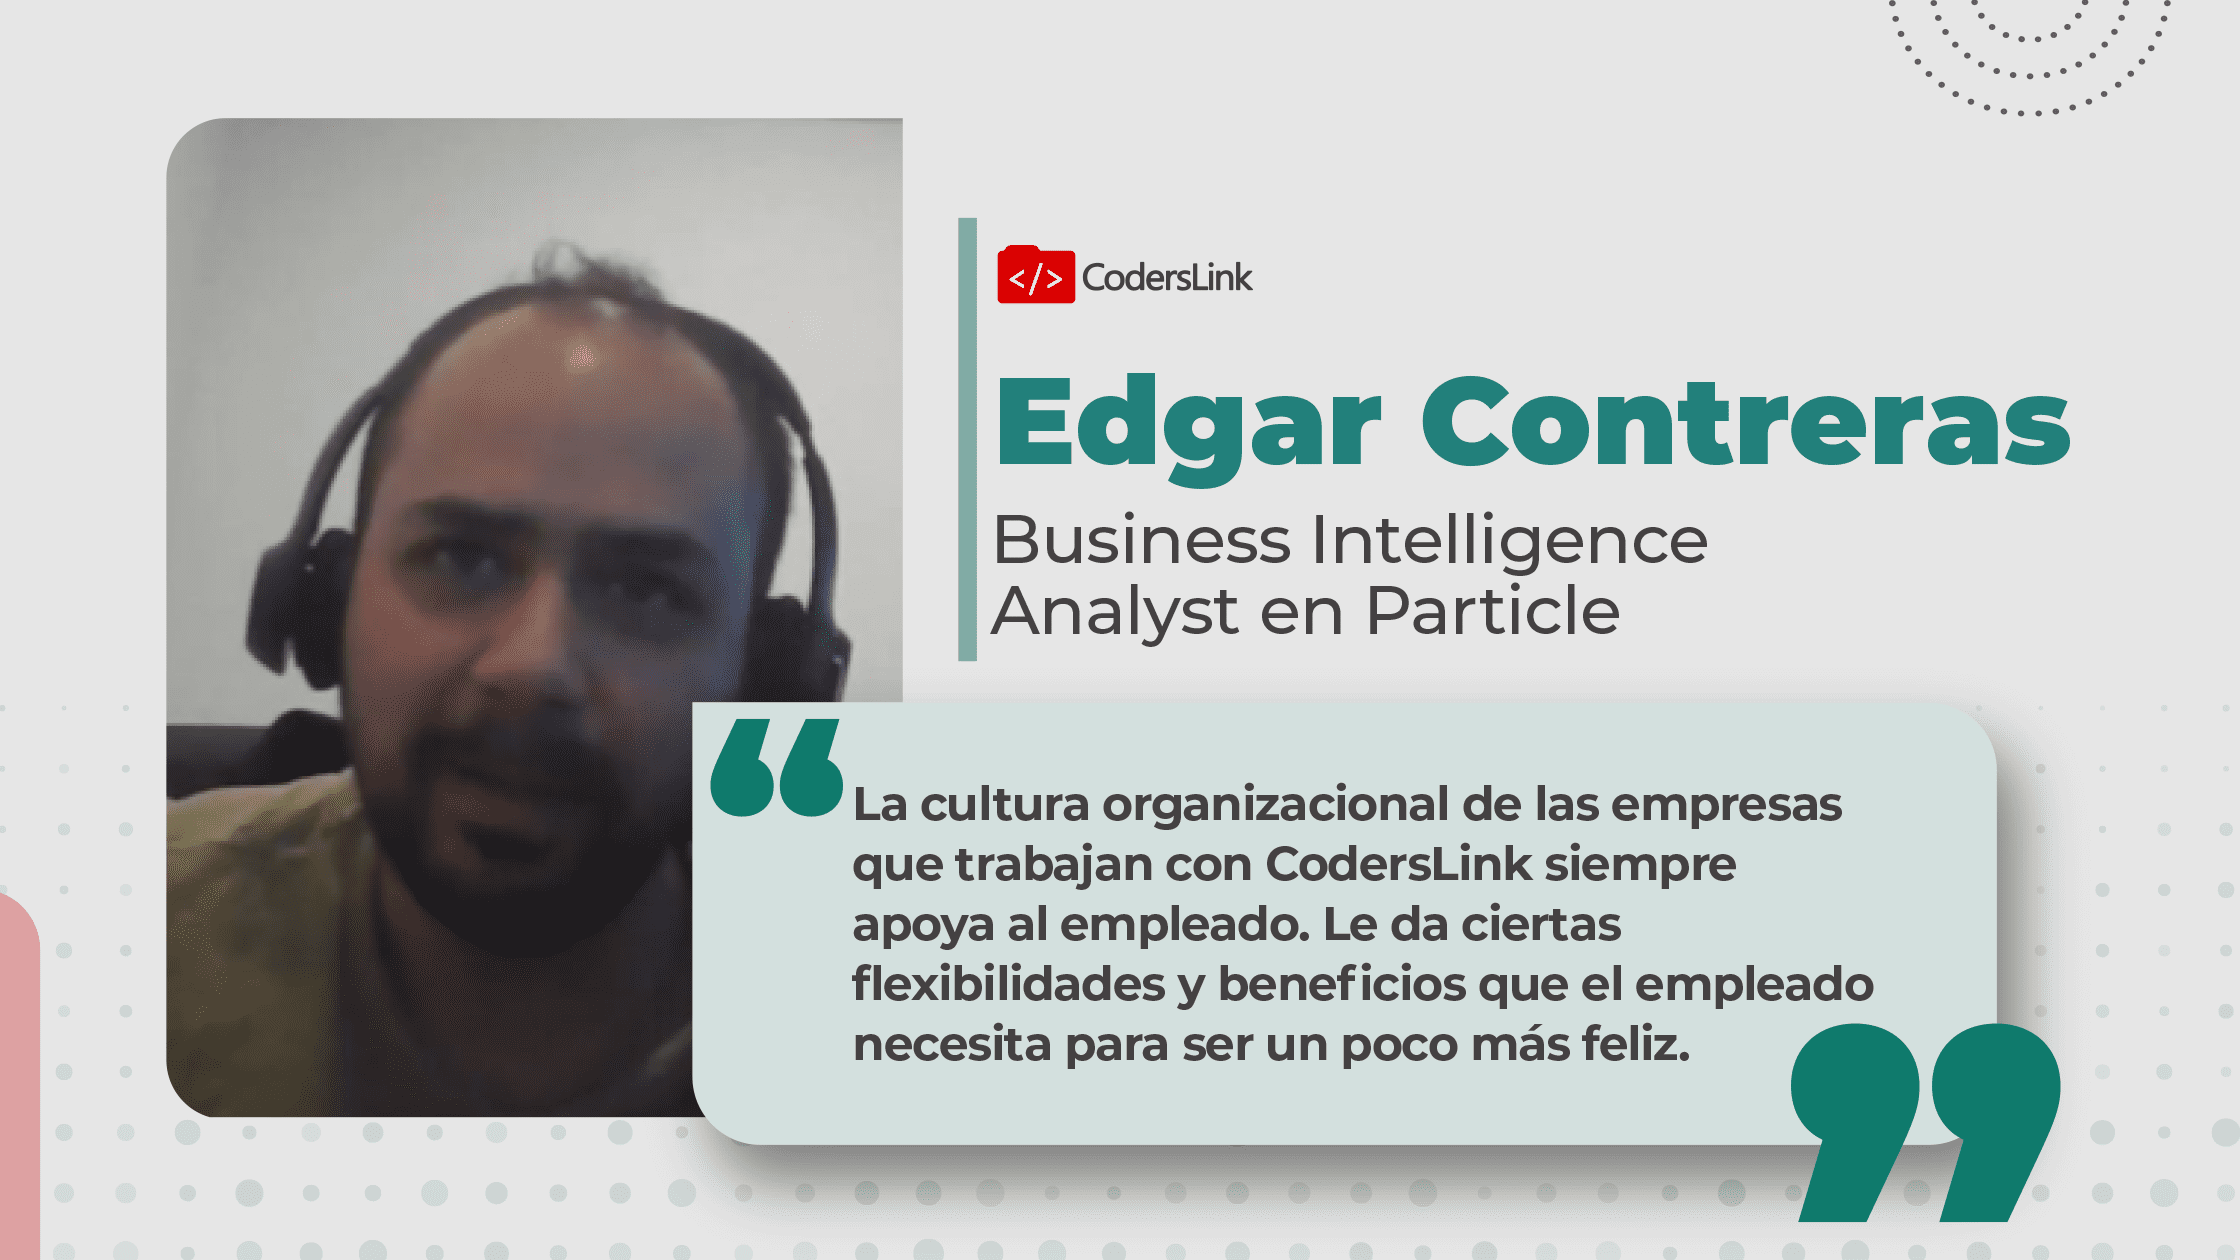 Edgar Contreras Business Intelligence Analyst en Particle